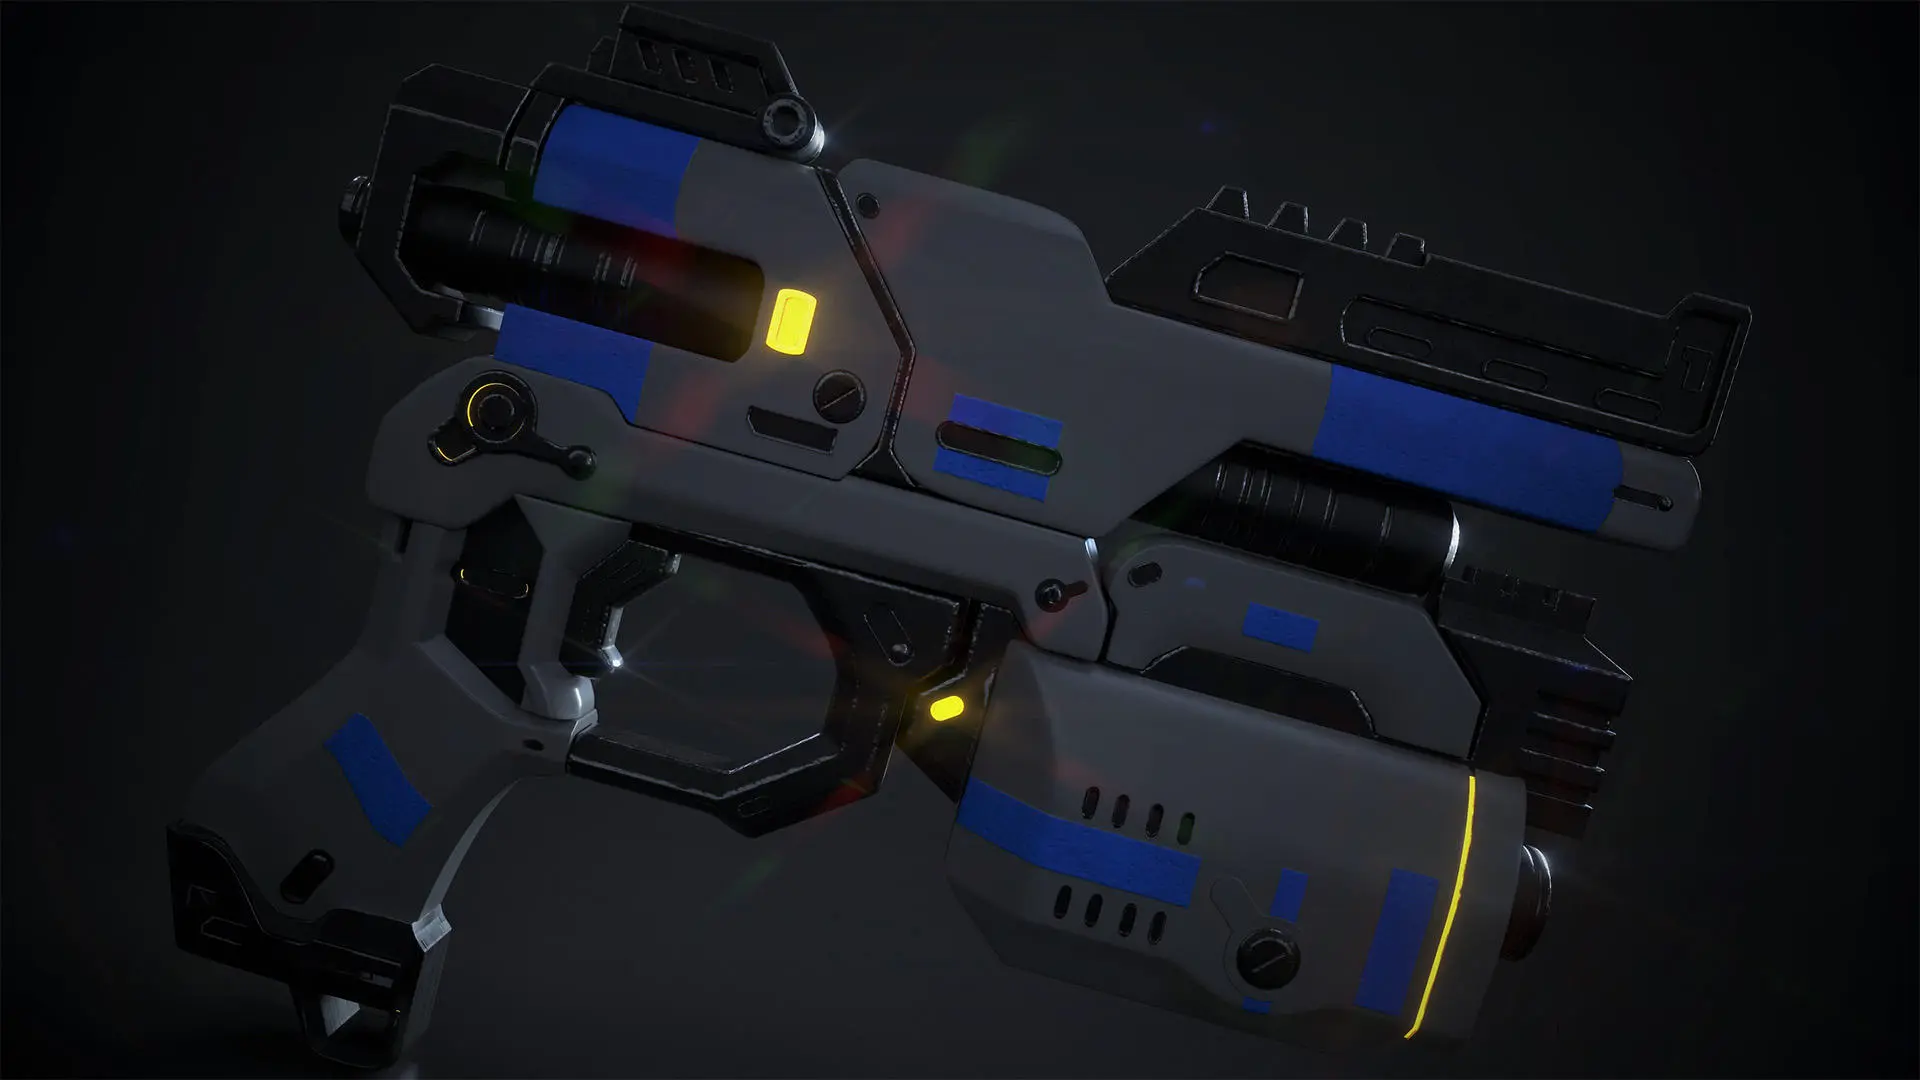 Picture shows pistol design by Harrison